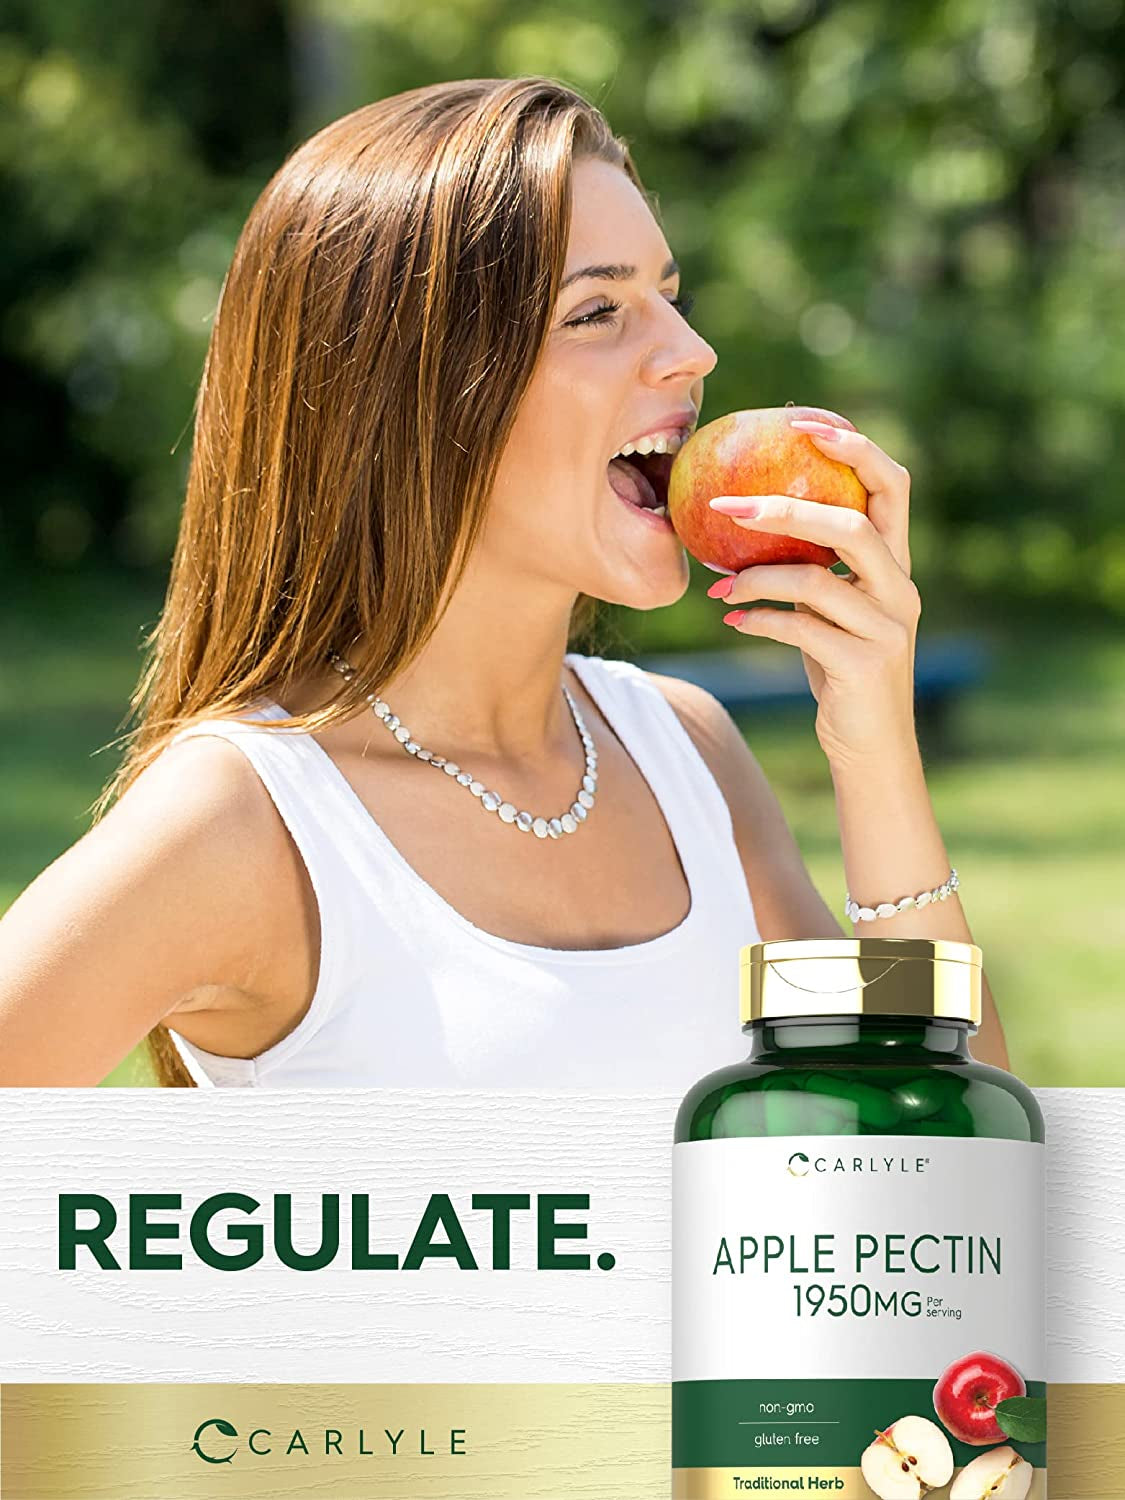 Carlyle Apple Pectin | 1950Mg | 150 Capsules | Non-Gmo & Gluten Free Herbal Supplement